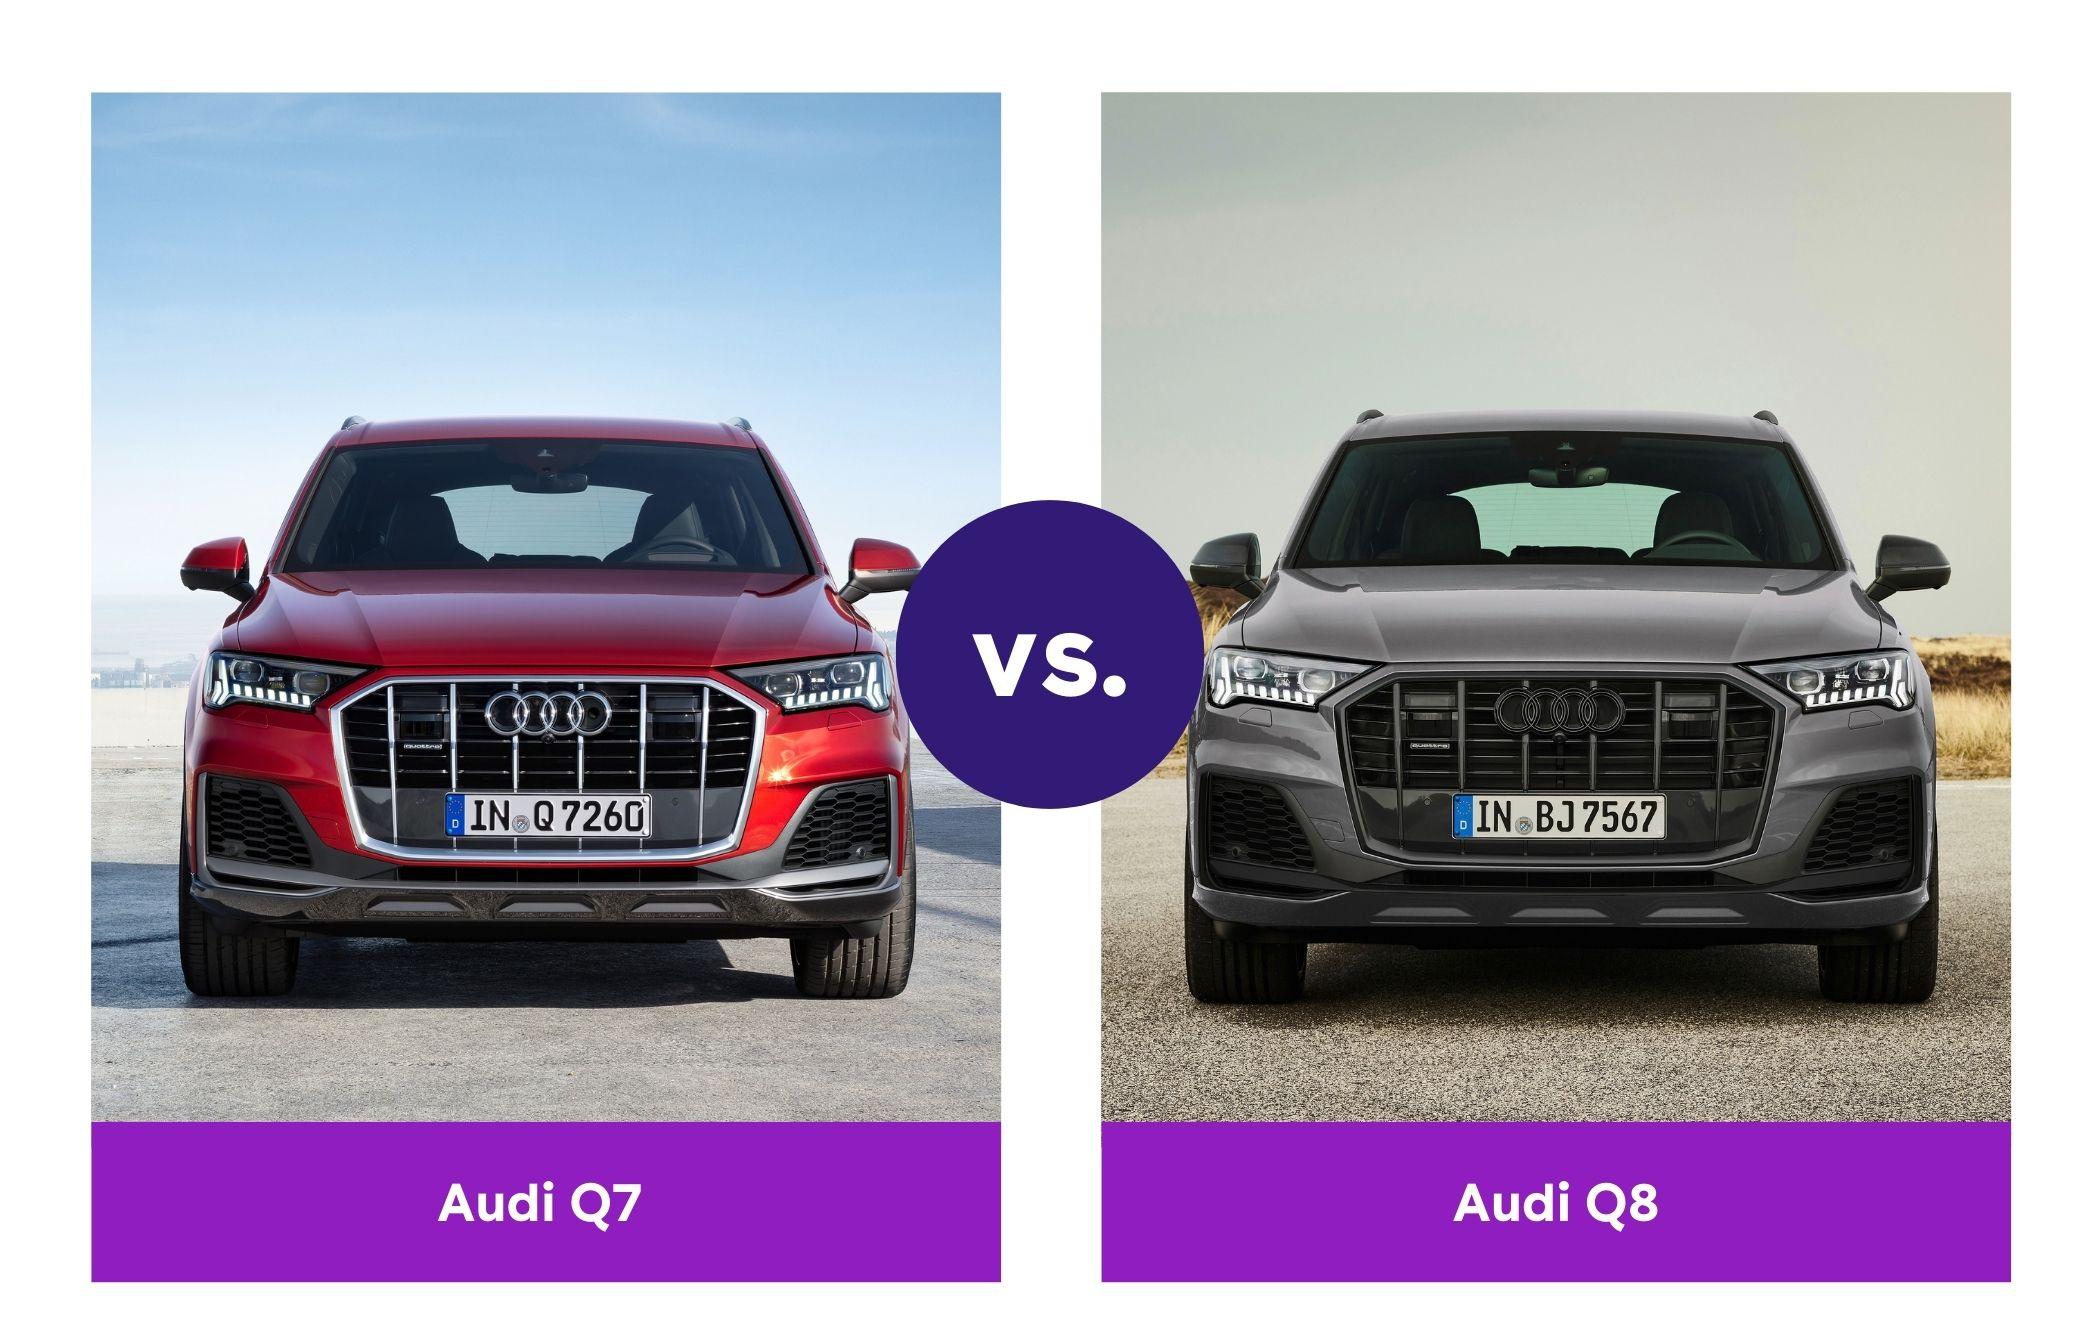 A comparison of a red Audi Q7 and a grey Audi Q8